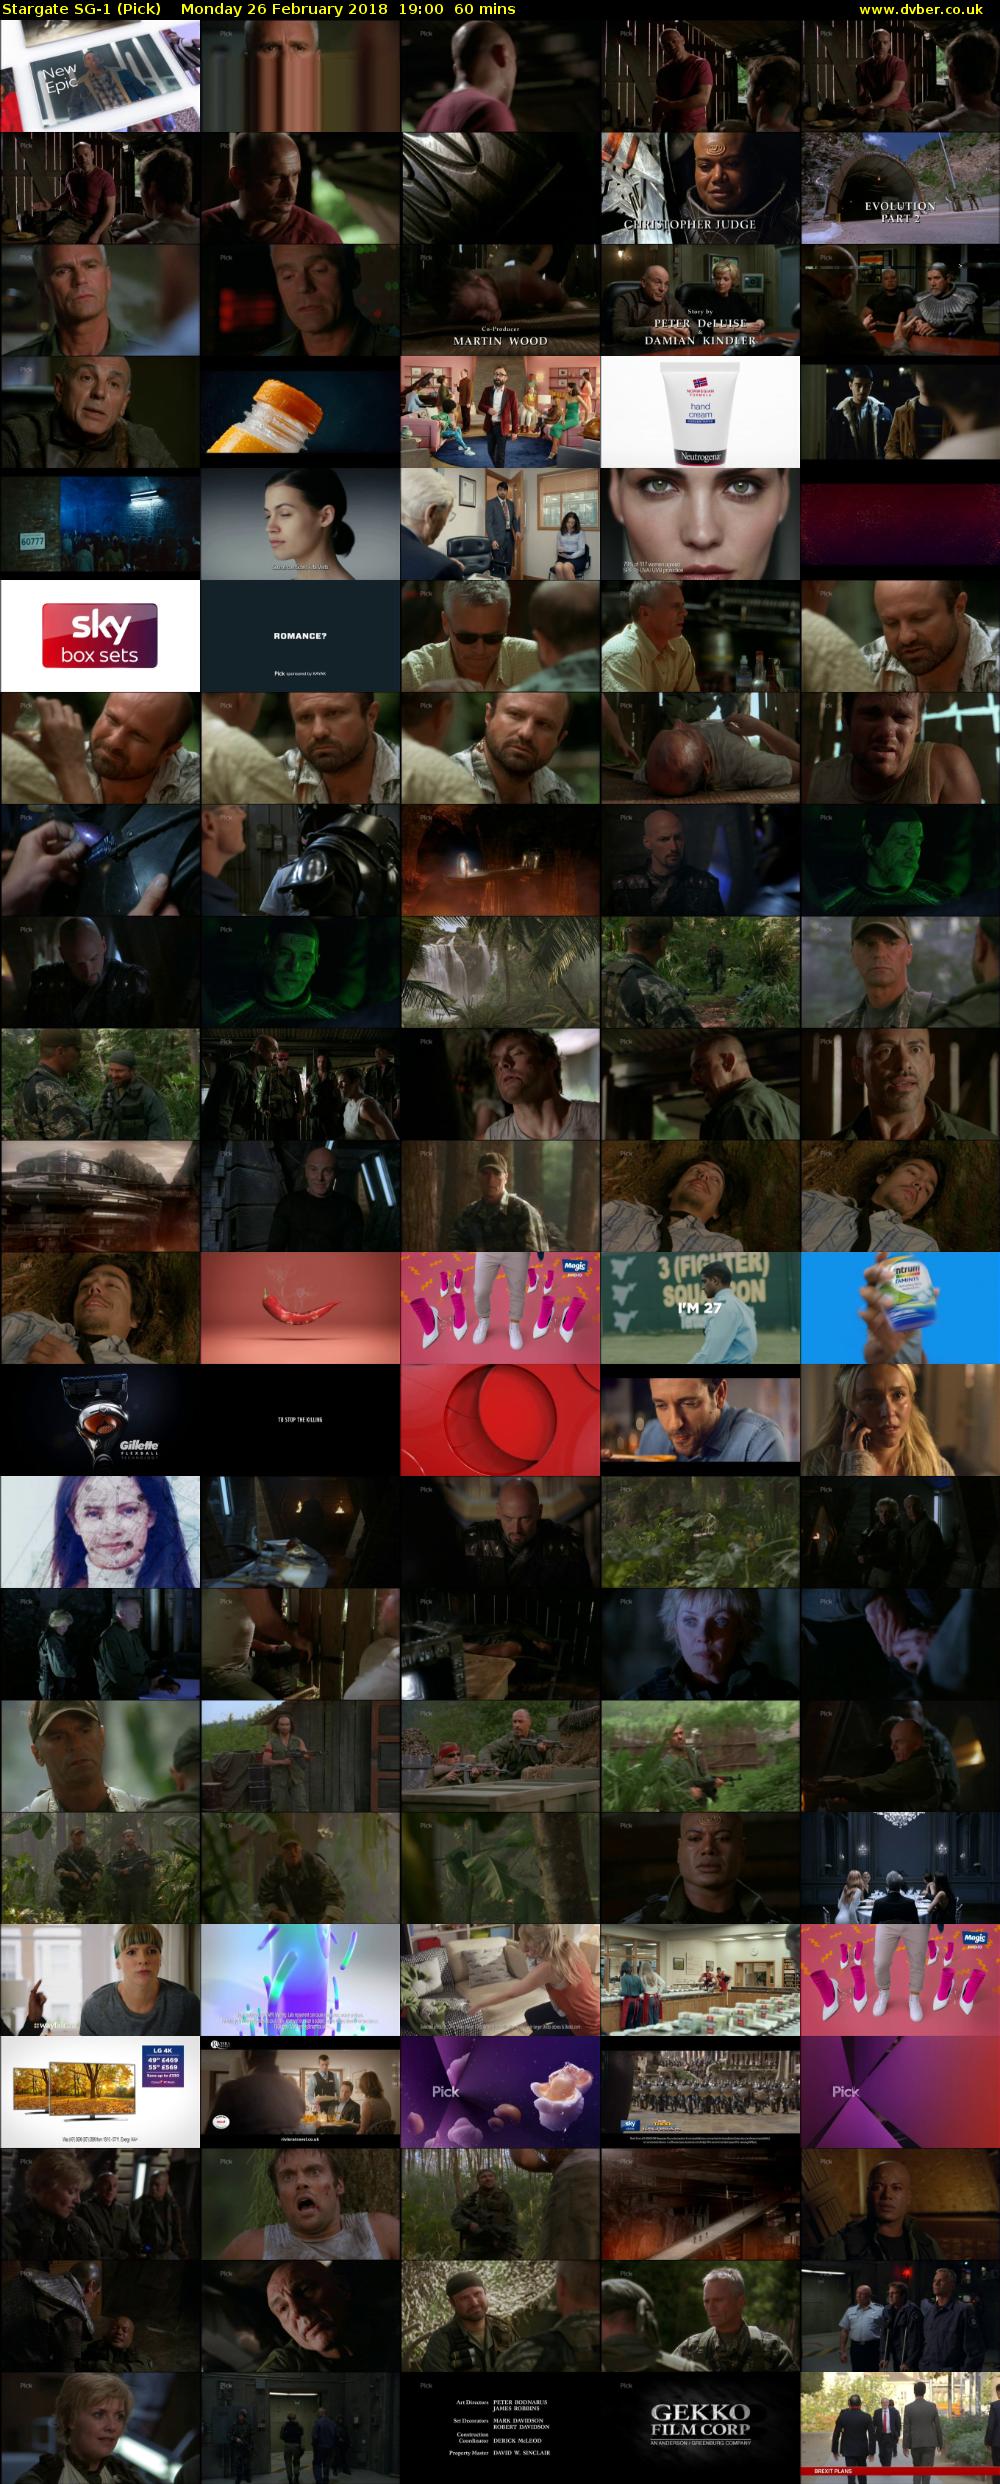 Stargate SG-1 (Pick) Monday 26 February 2018 19:00 - 20:00